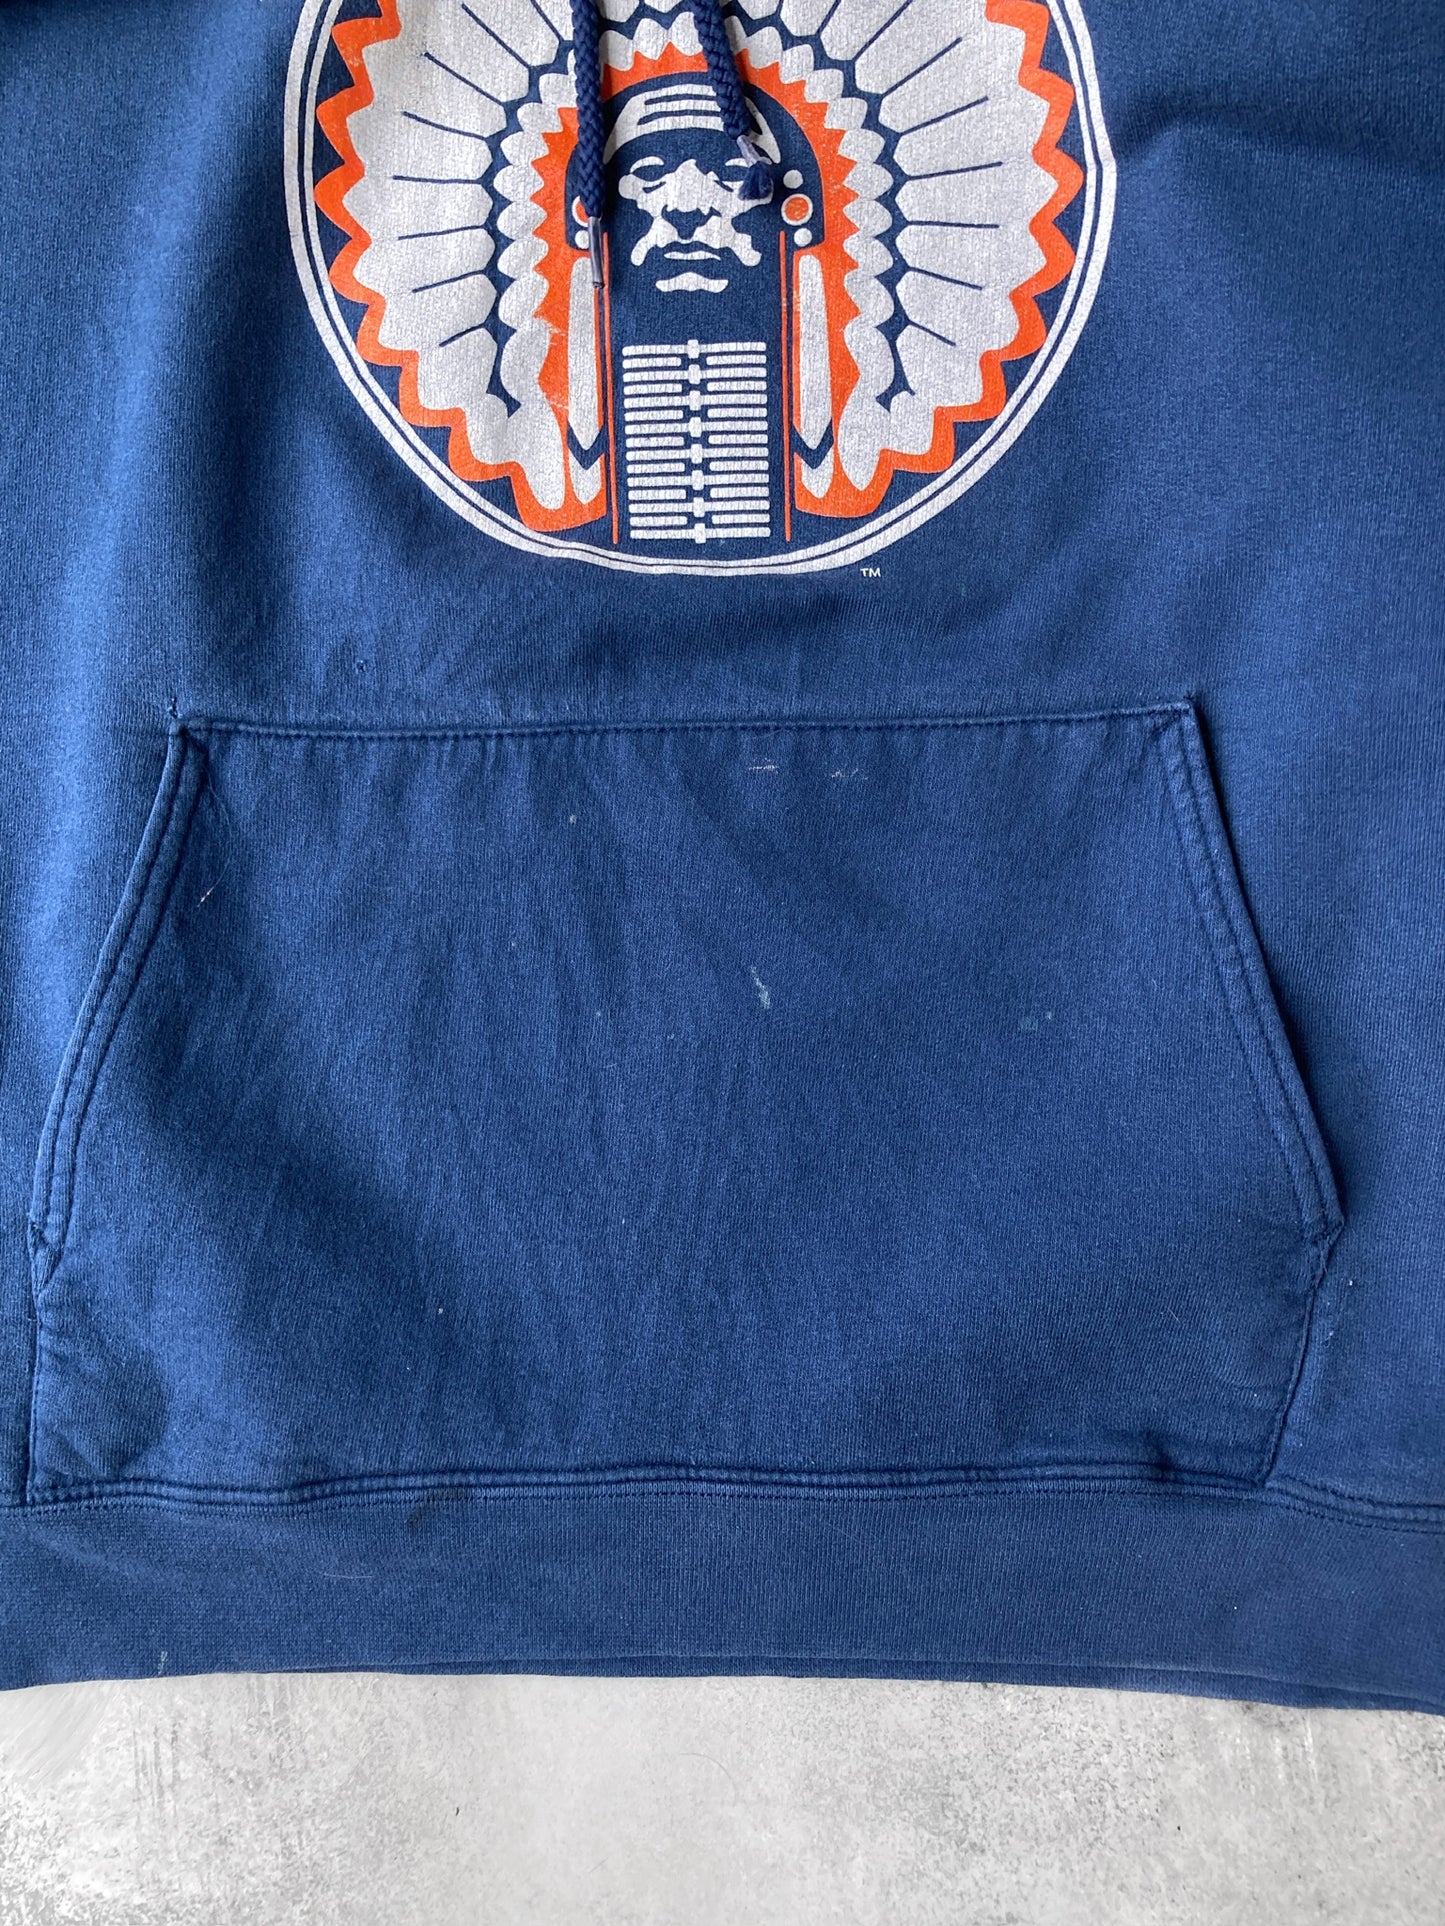 University of Illinois Sweatshirt 90’s - Large